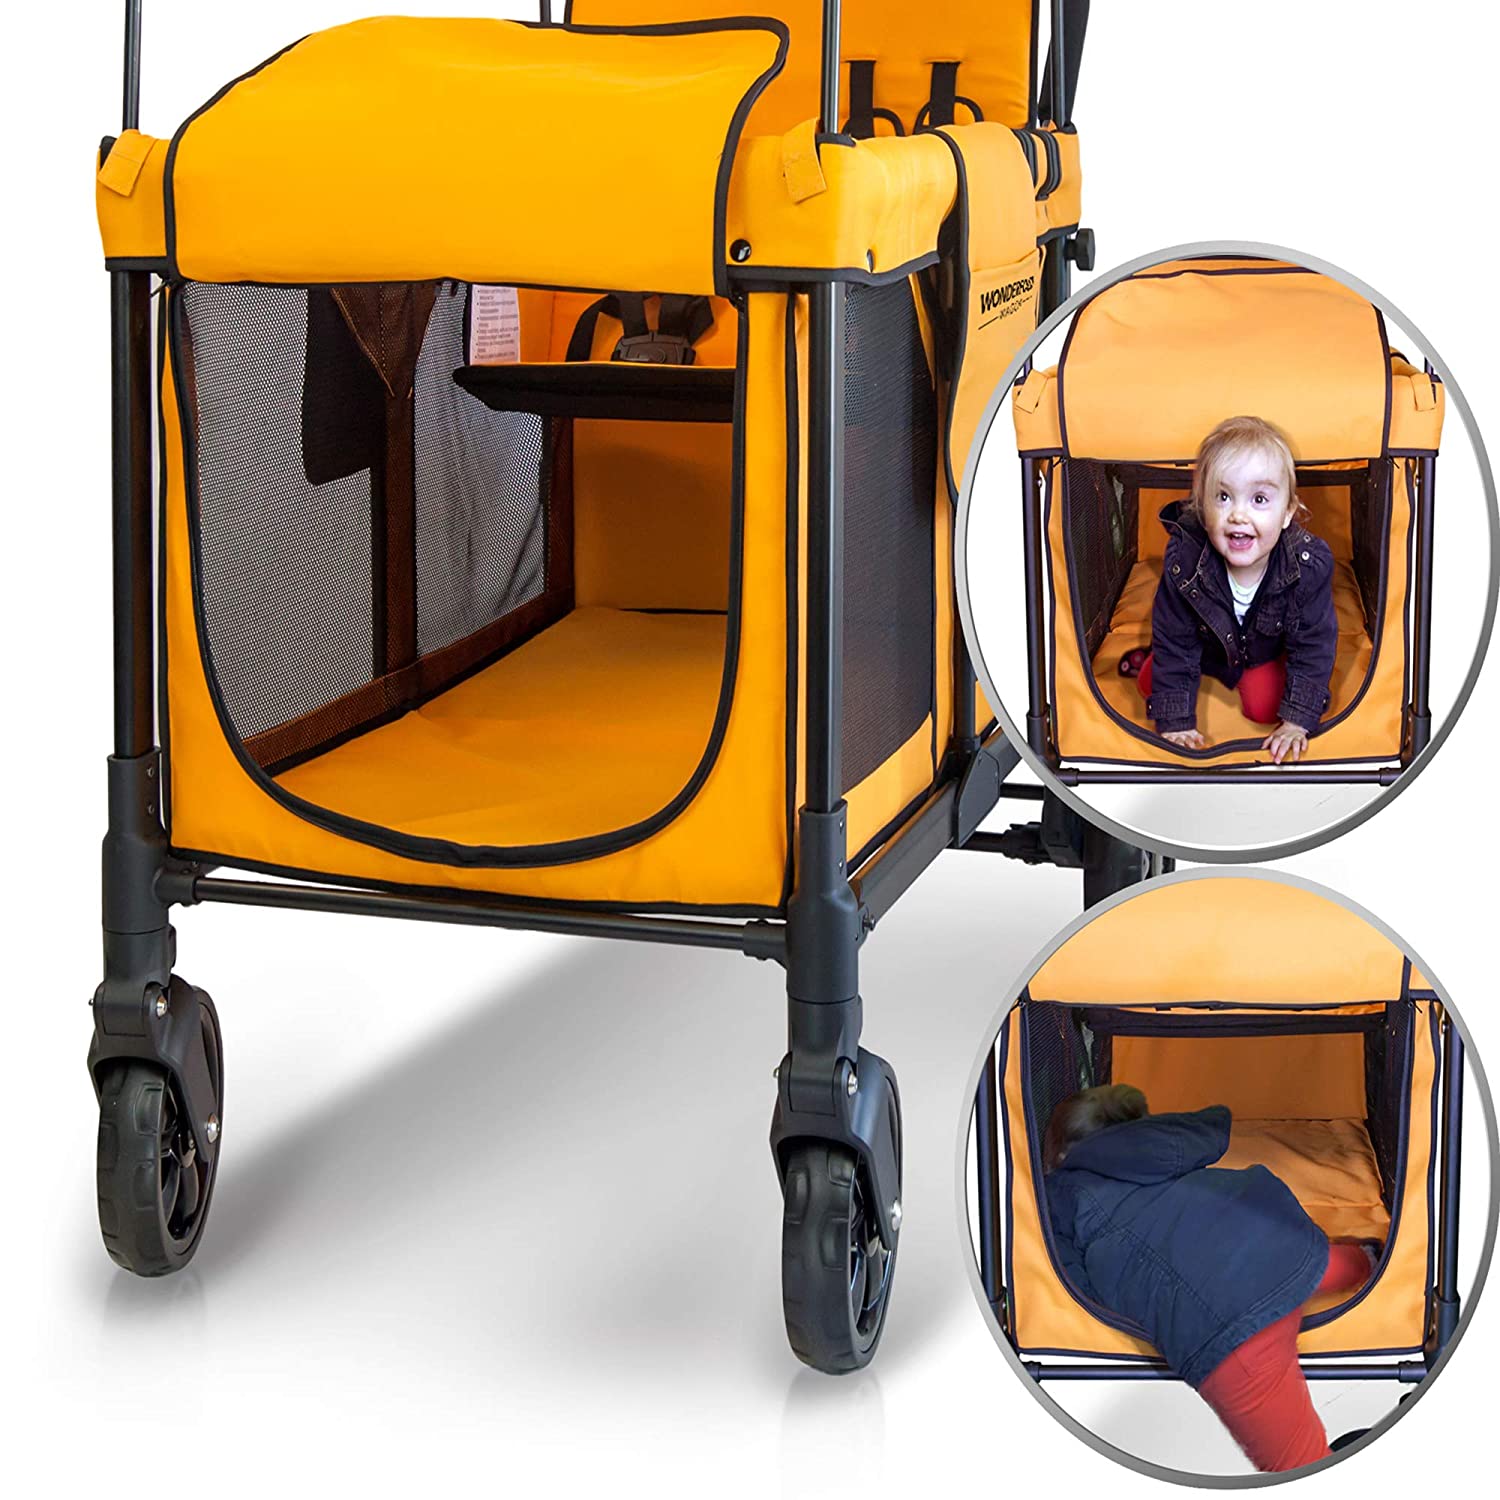 WonderFold W4 Elite Push/Pull 4-Passenger Quad Stroller Wagon Orange New